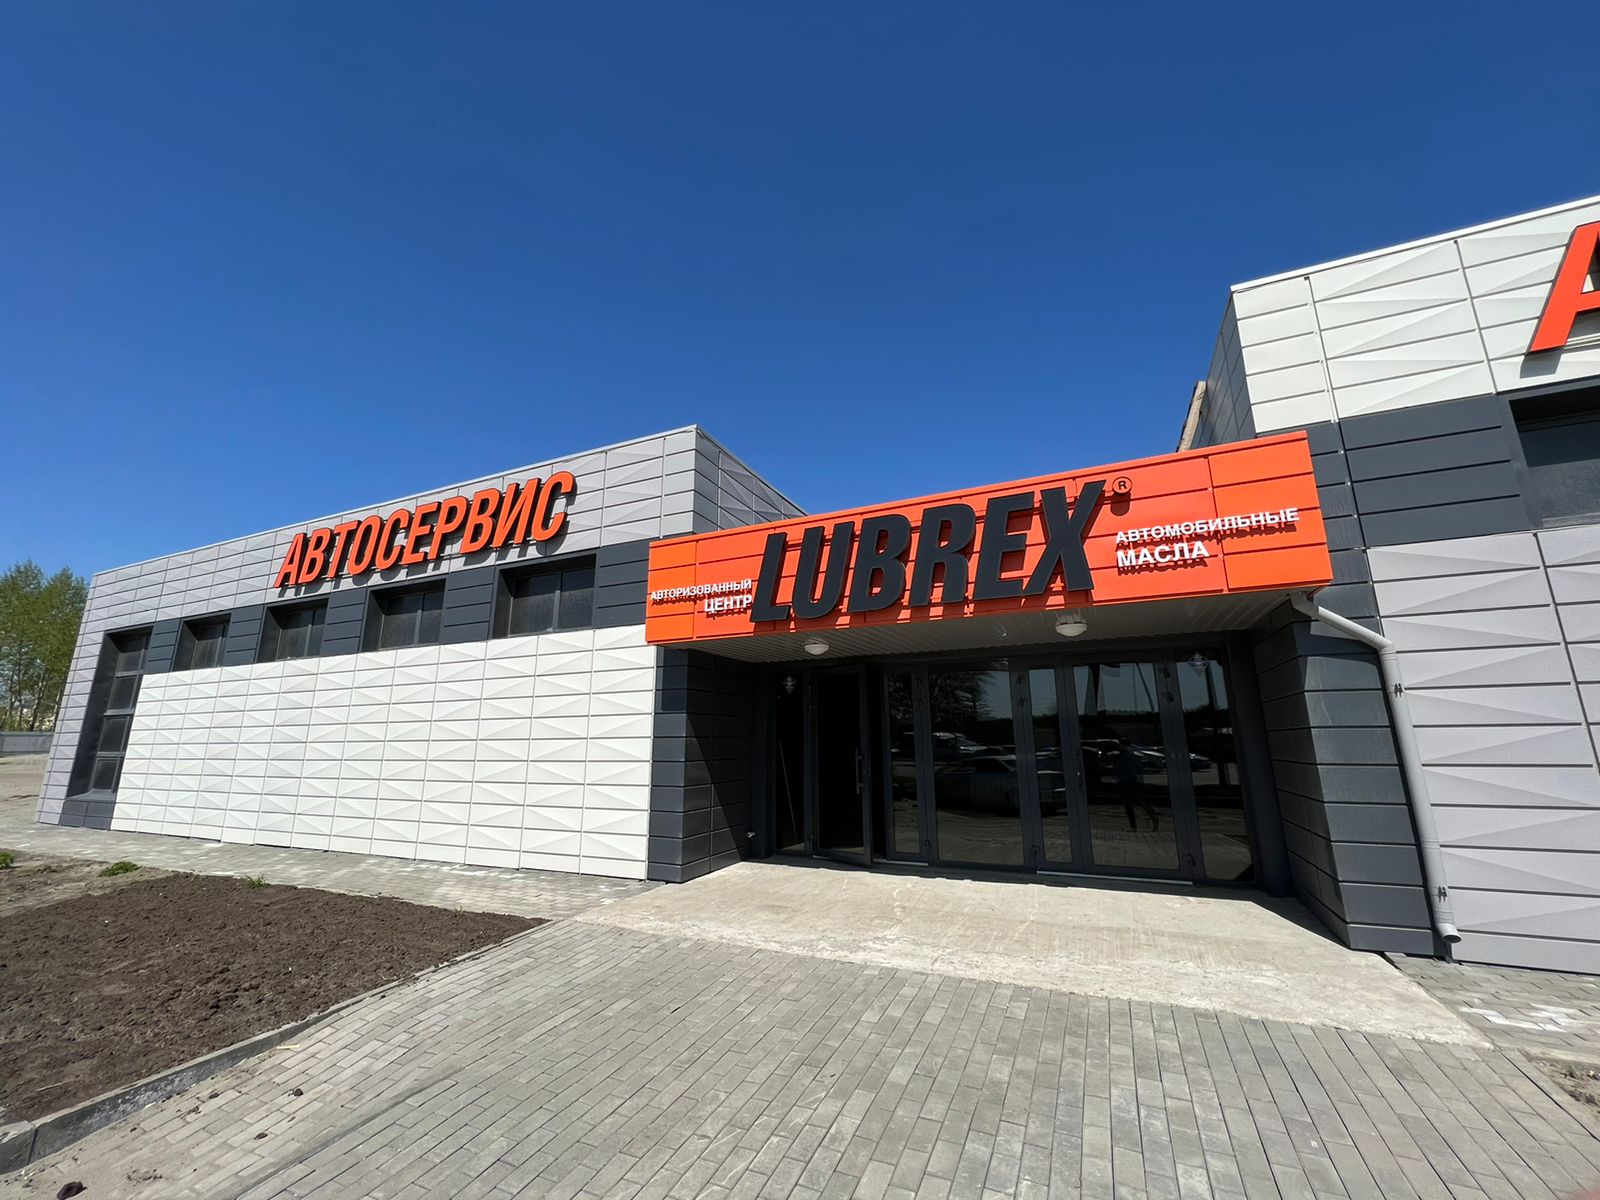 Авторизованный центр LUBREX в городе Барнаул.